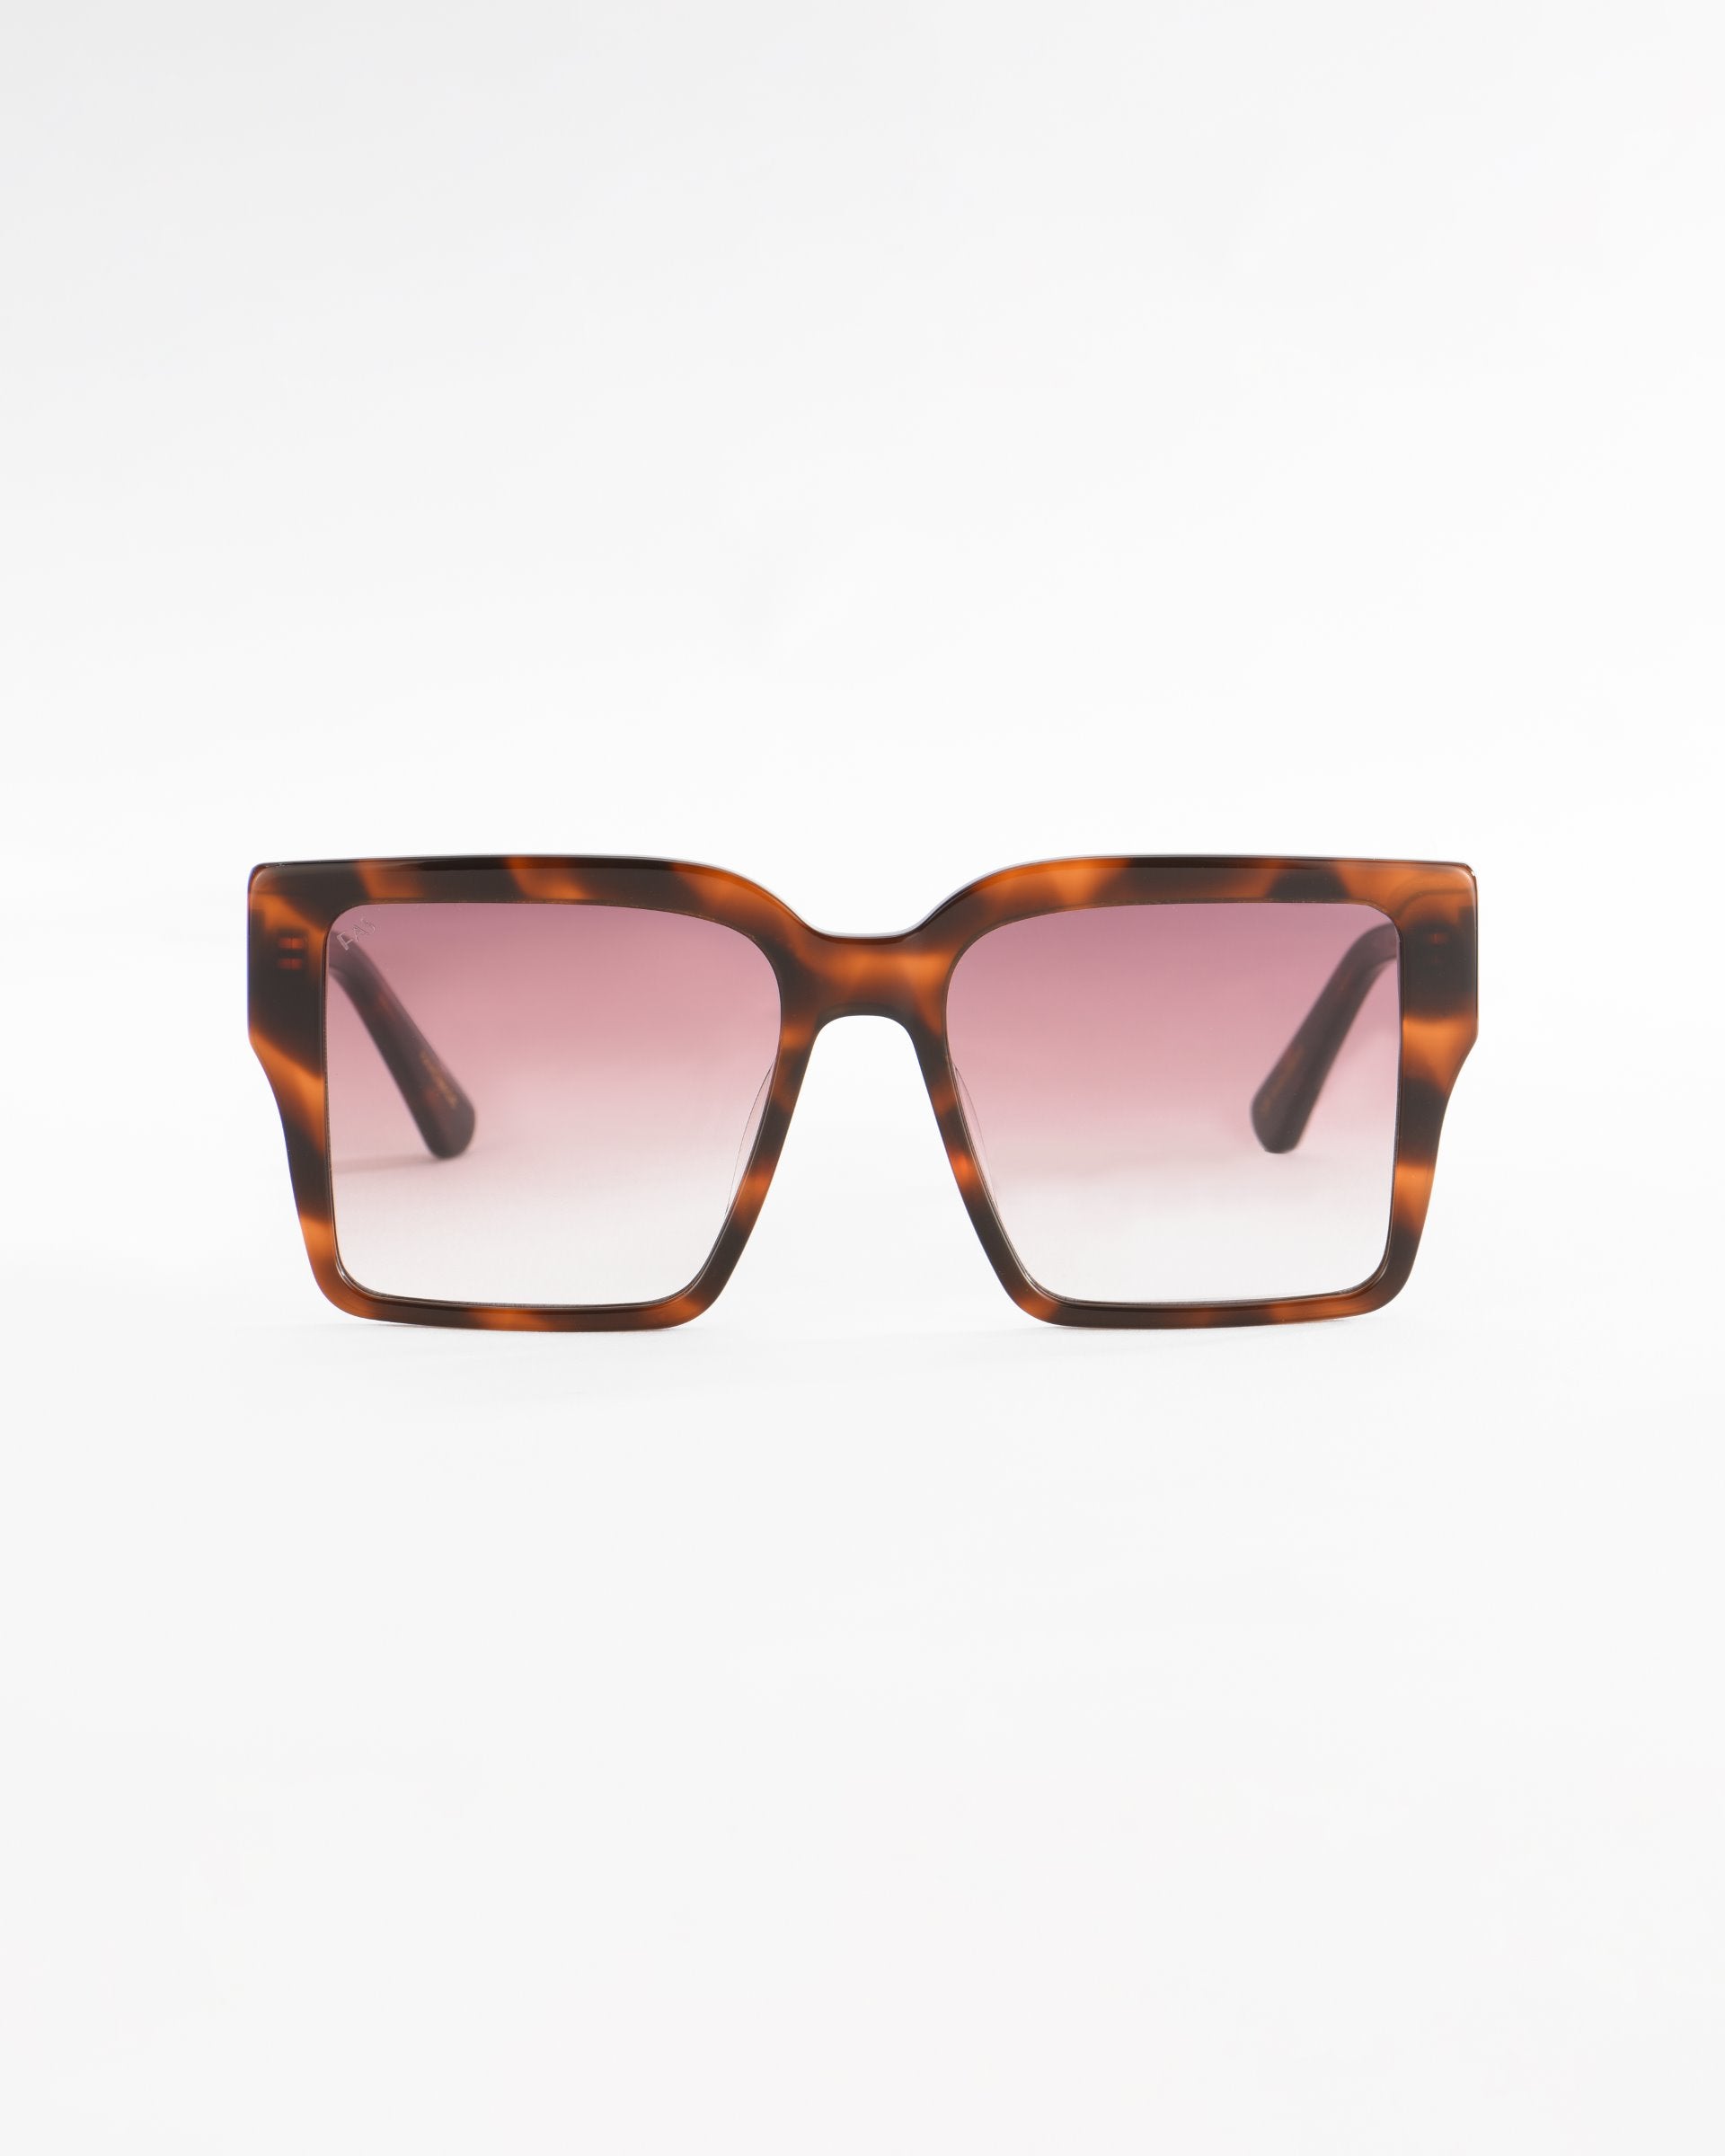 For Art's Sake® Castle, square, oversized sunglasses with tortoiseshell frames and ultra-lightweight, gradient pink lenses, set against a plain white background.